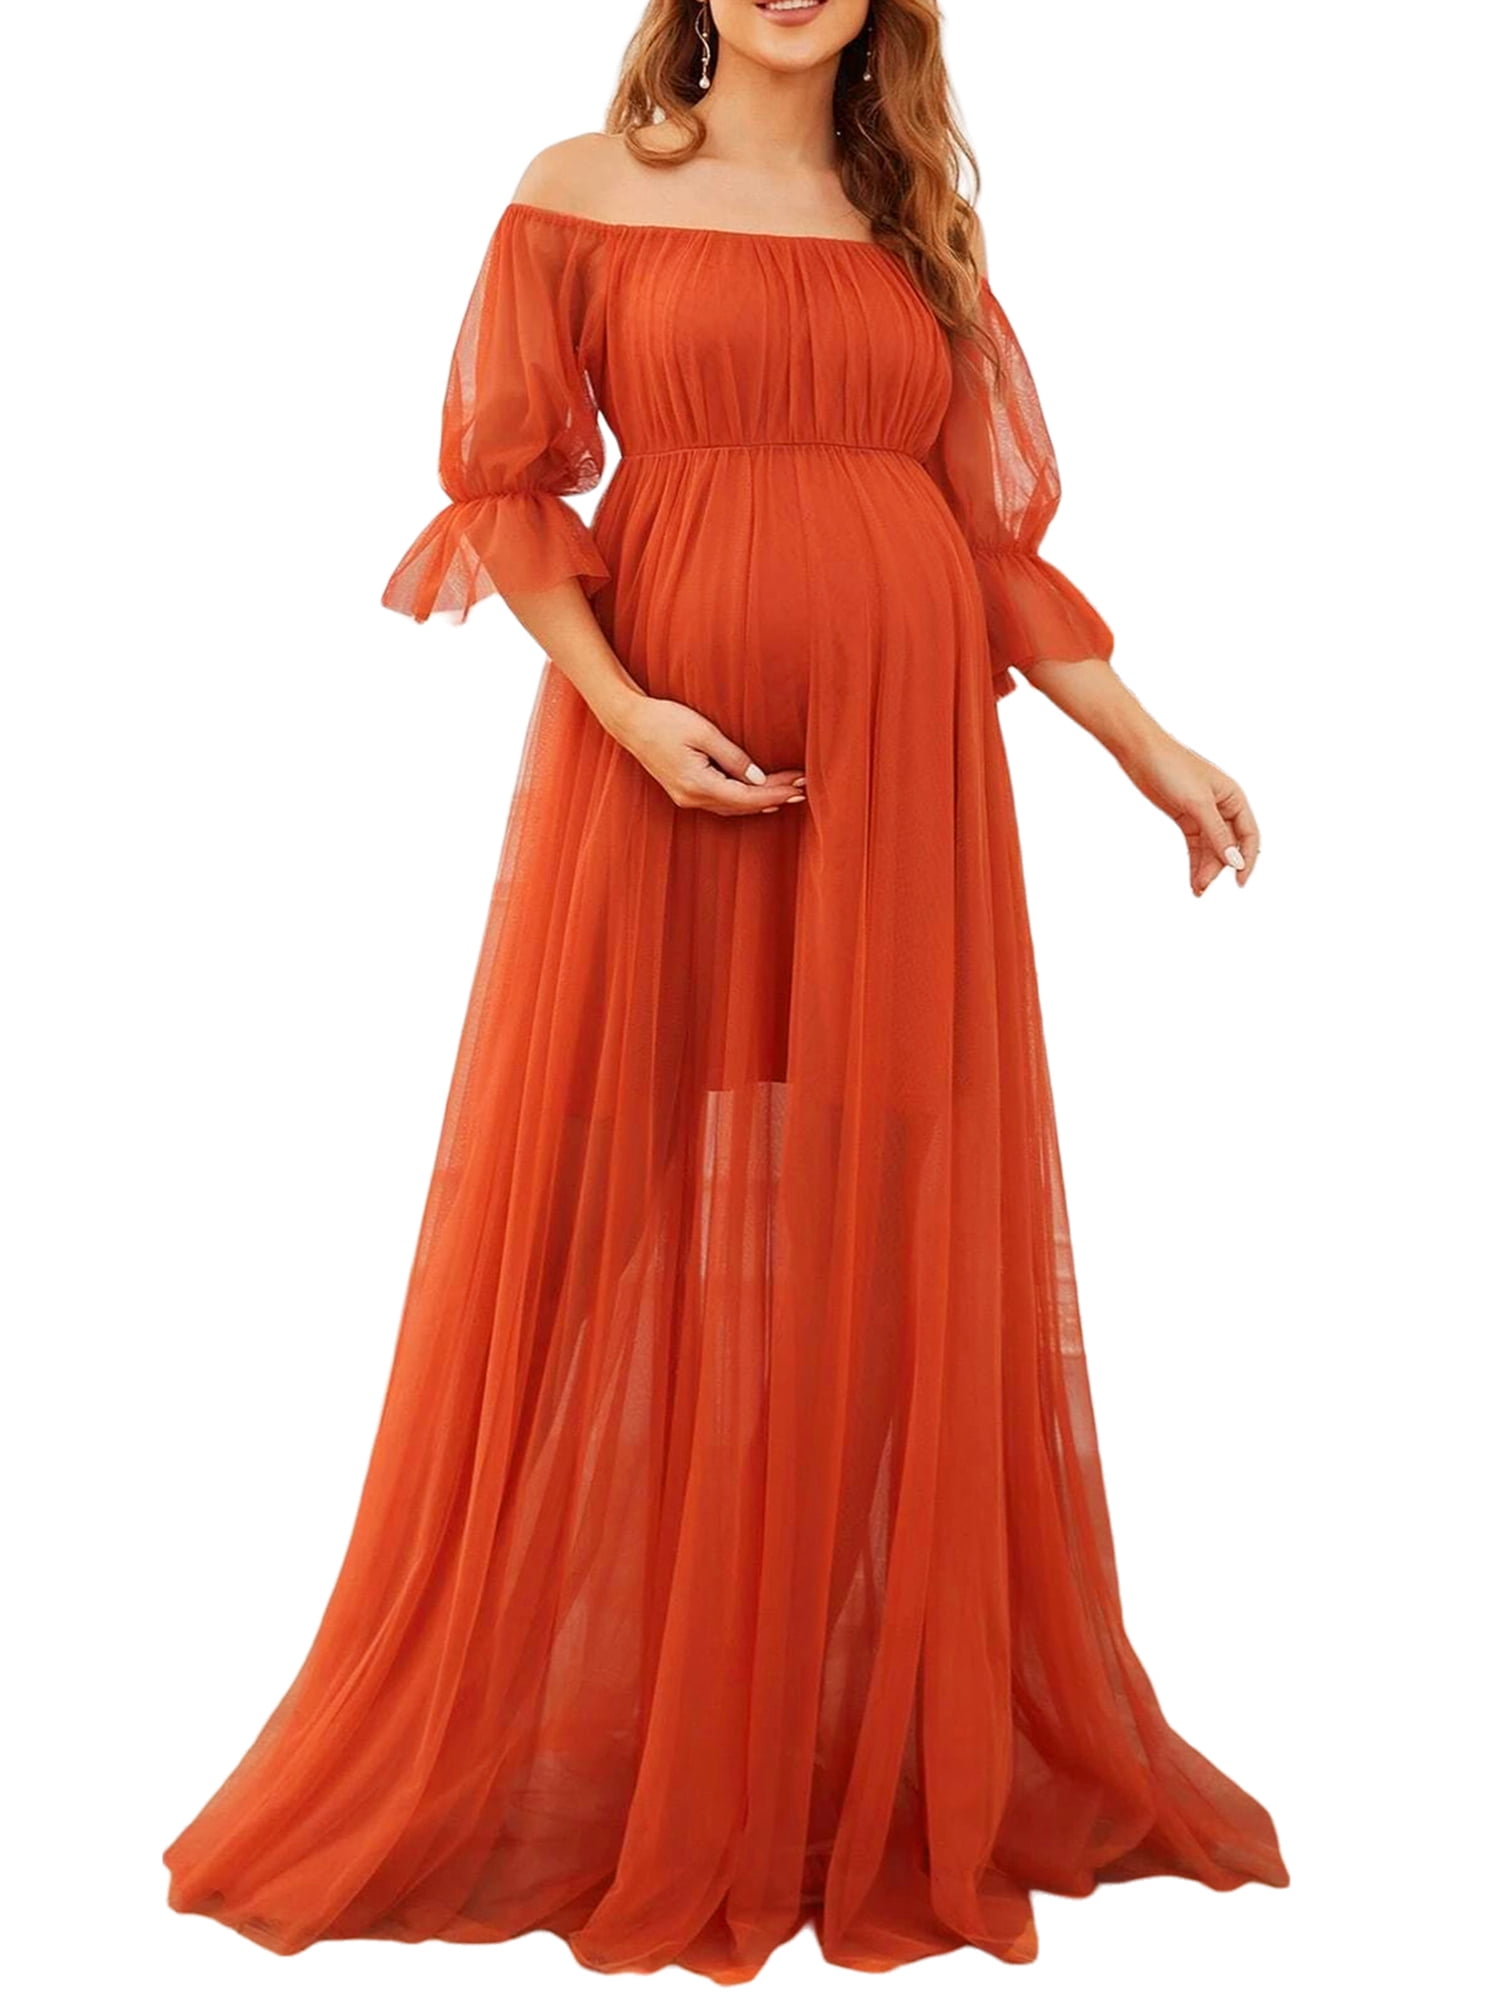 Sprifallbaby Women's Long Maternity Dresses Off Shoulder Short